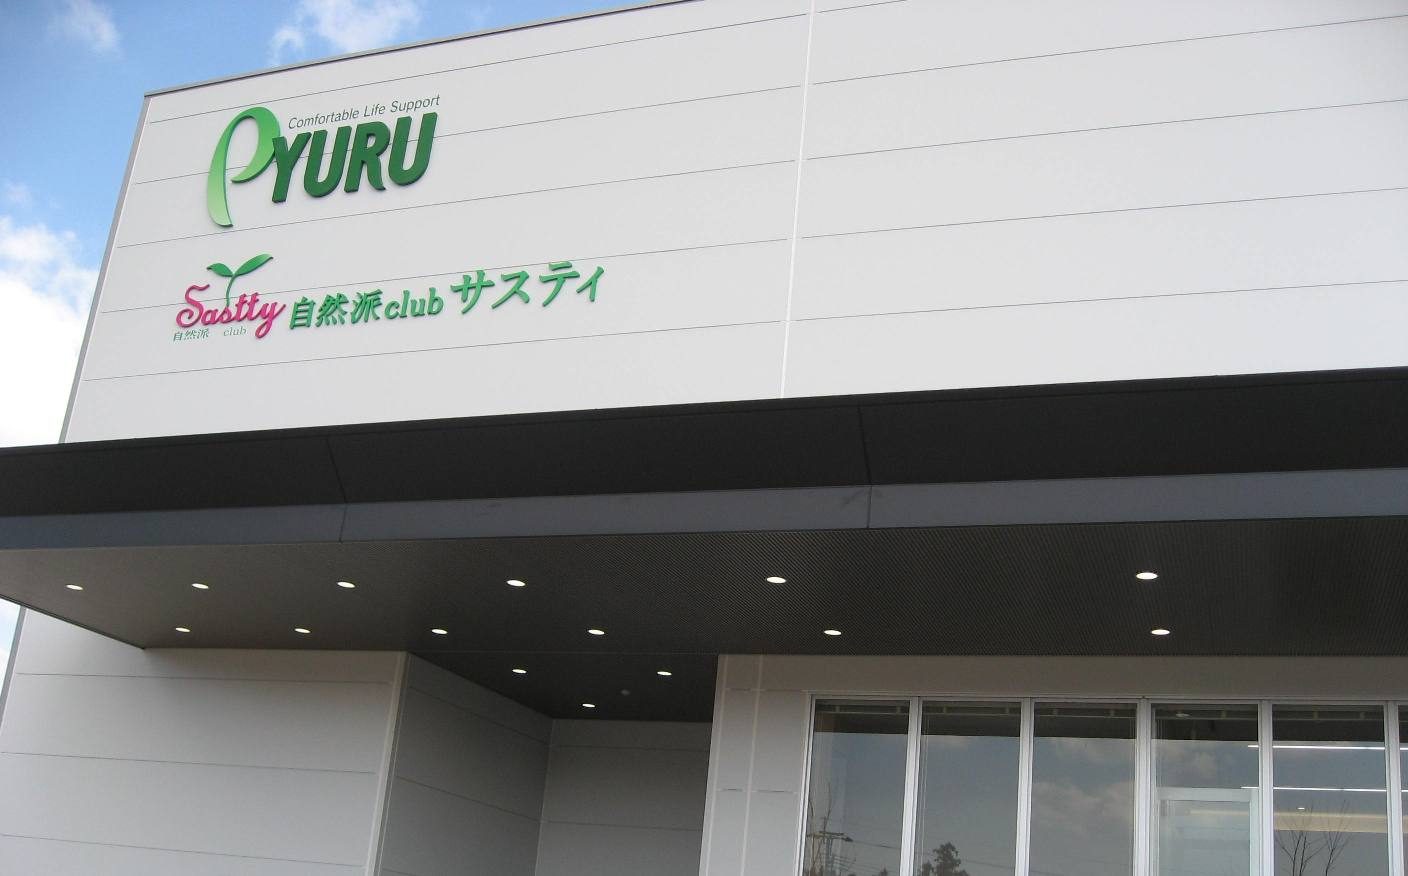 Japanese PE firm Unison Capital acquires hair treatment company Pyuru